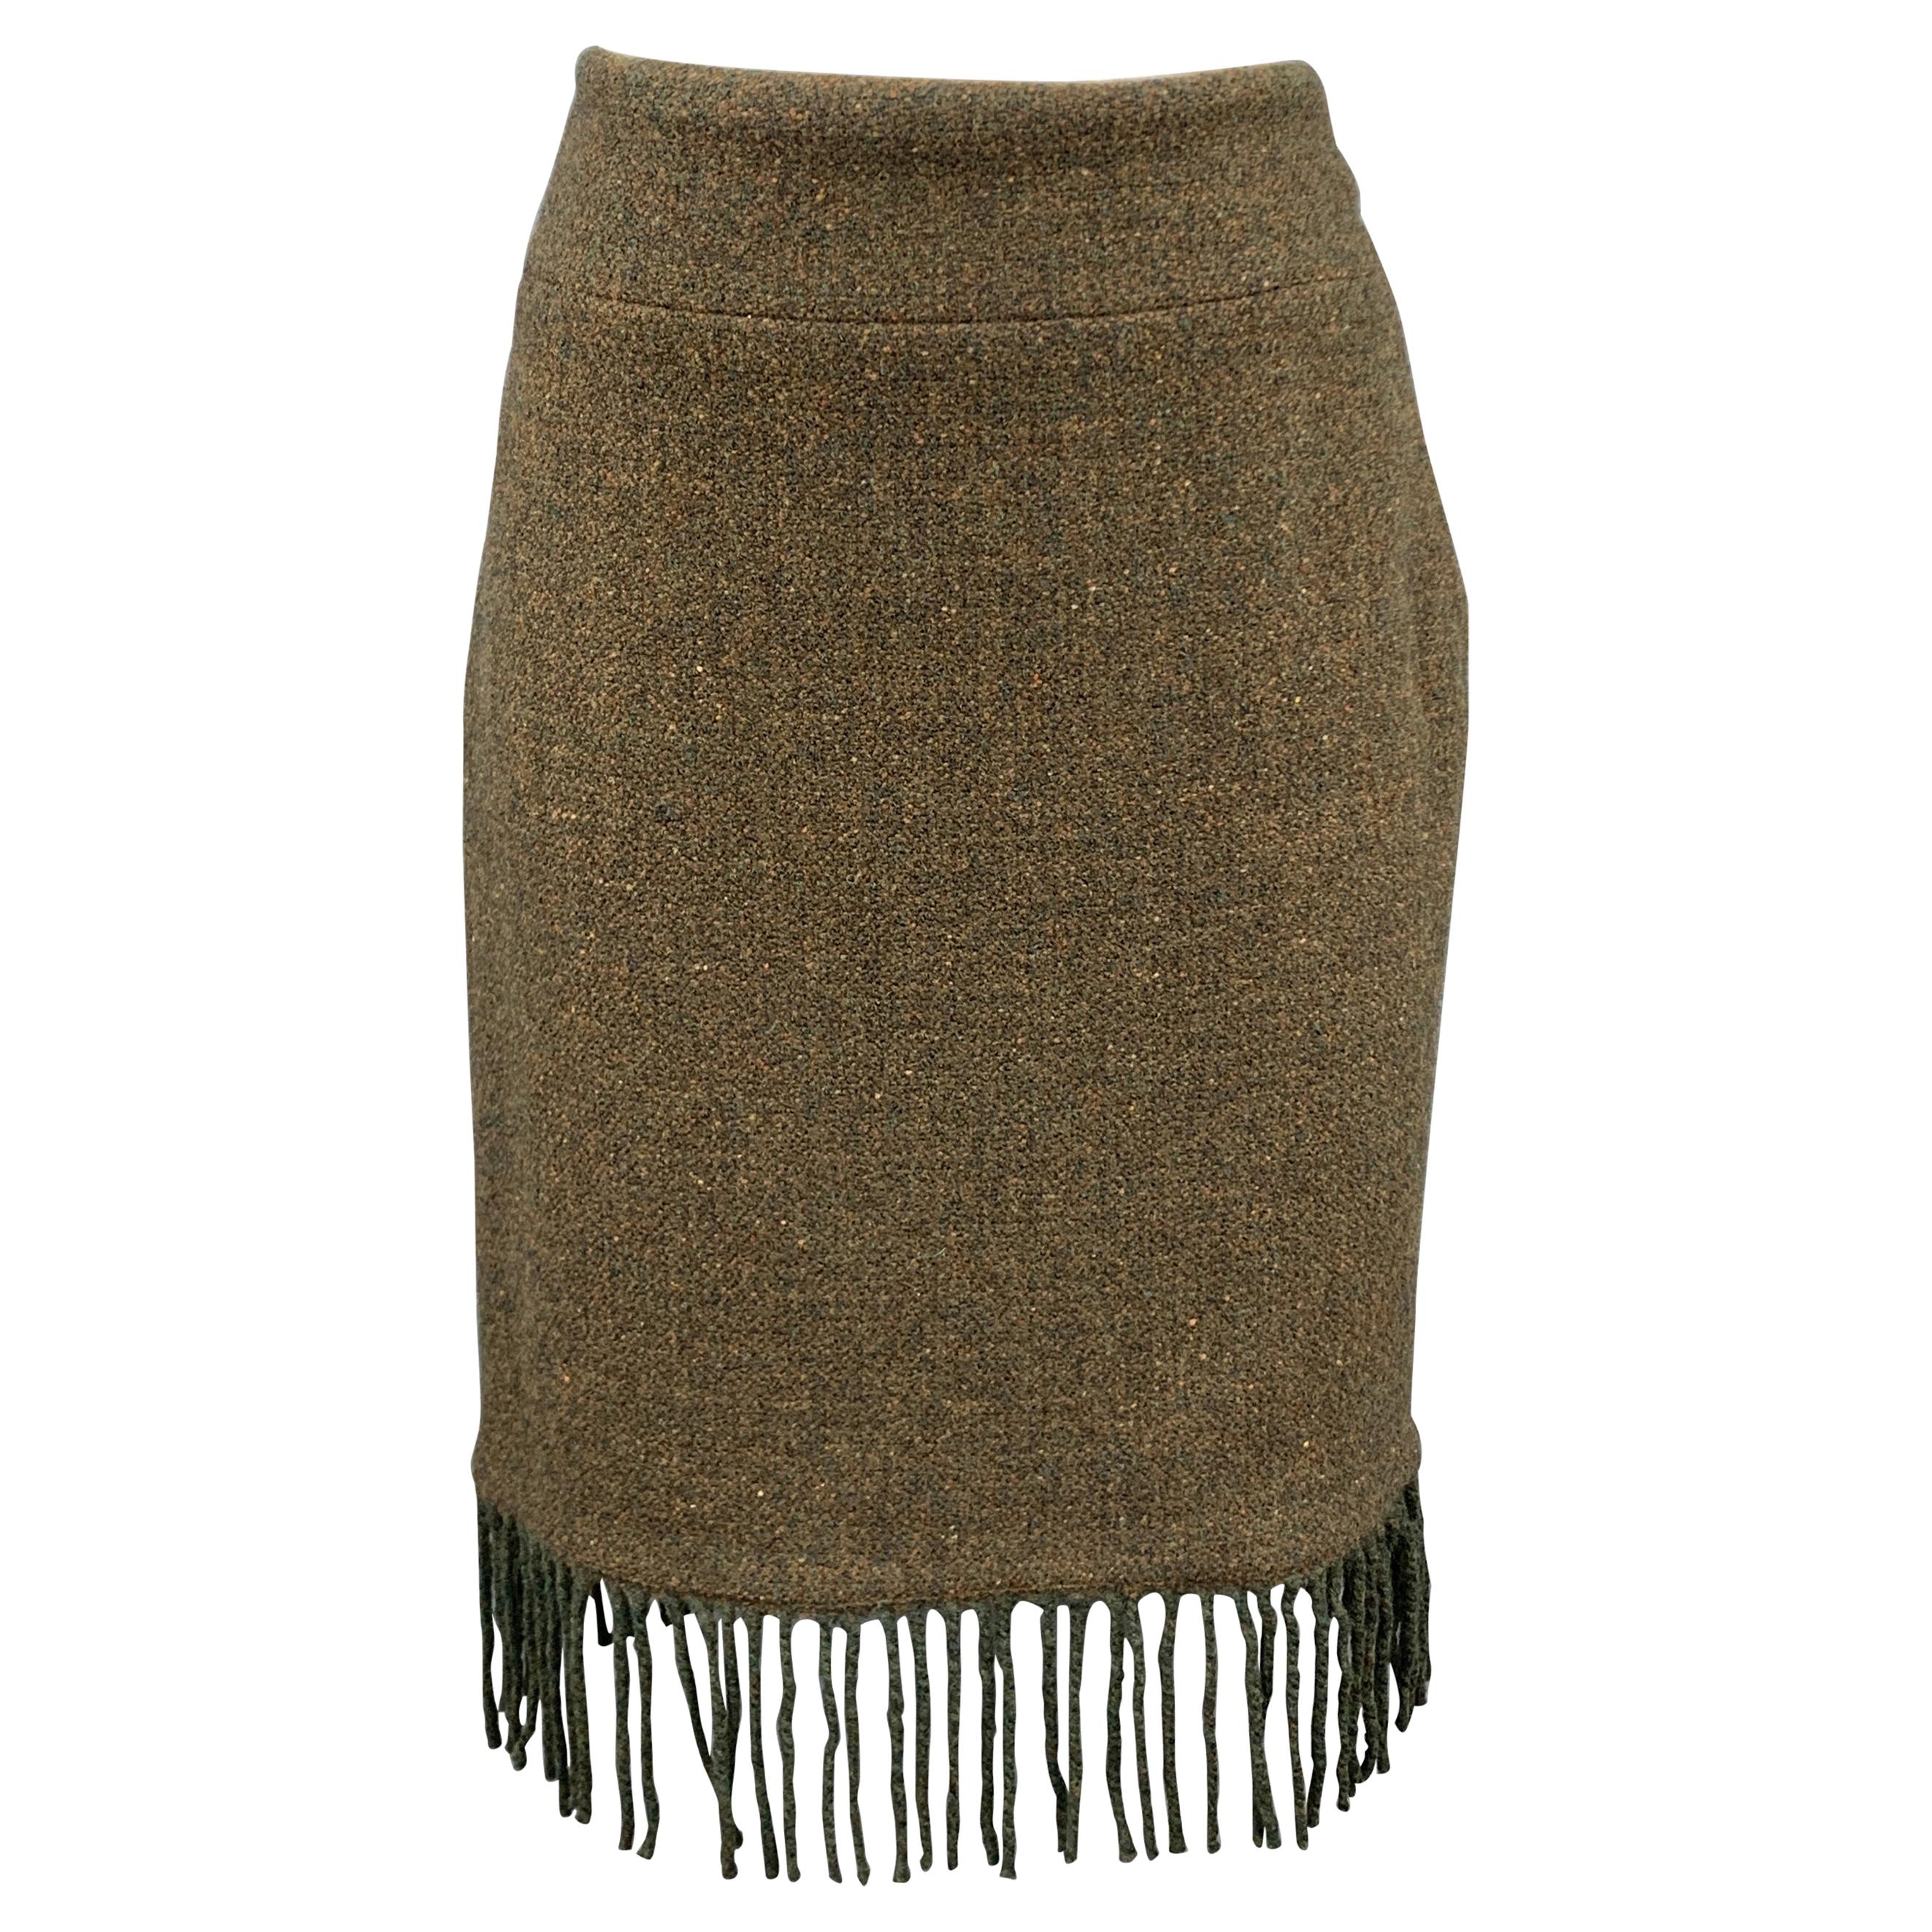 RALPH LAUREN Size 6 Olive Wool / Cashmere Tweed Fringe Skirt